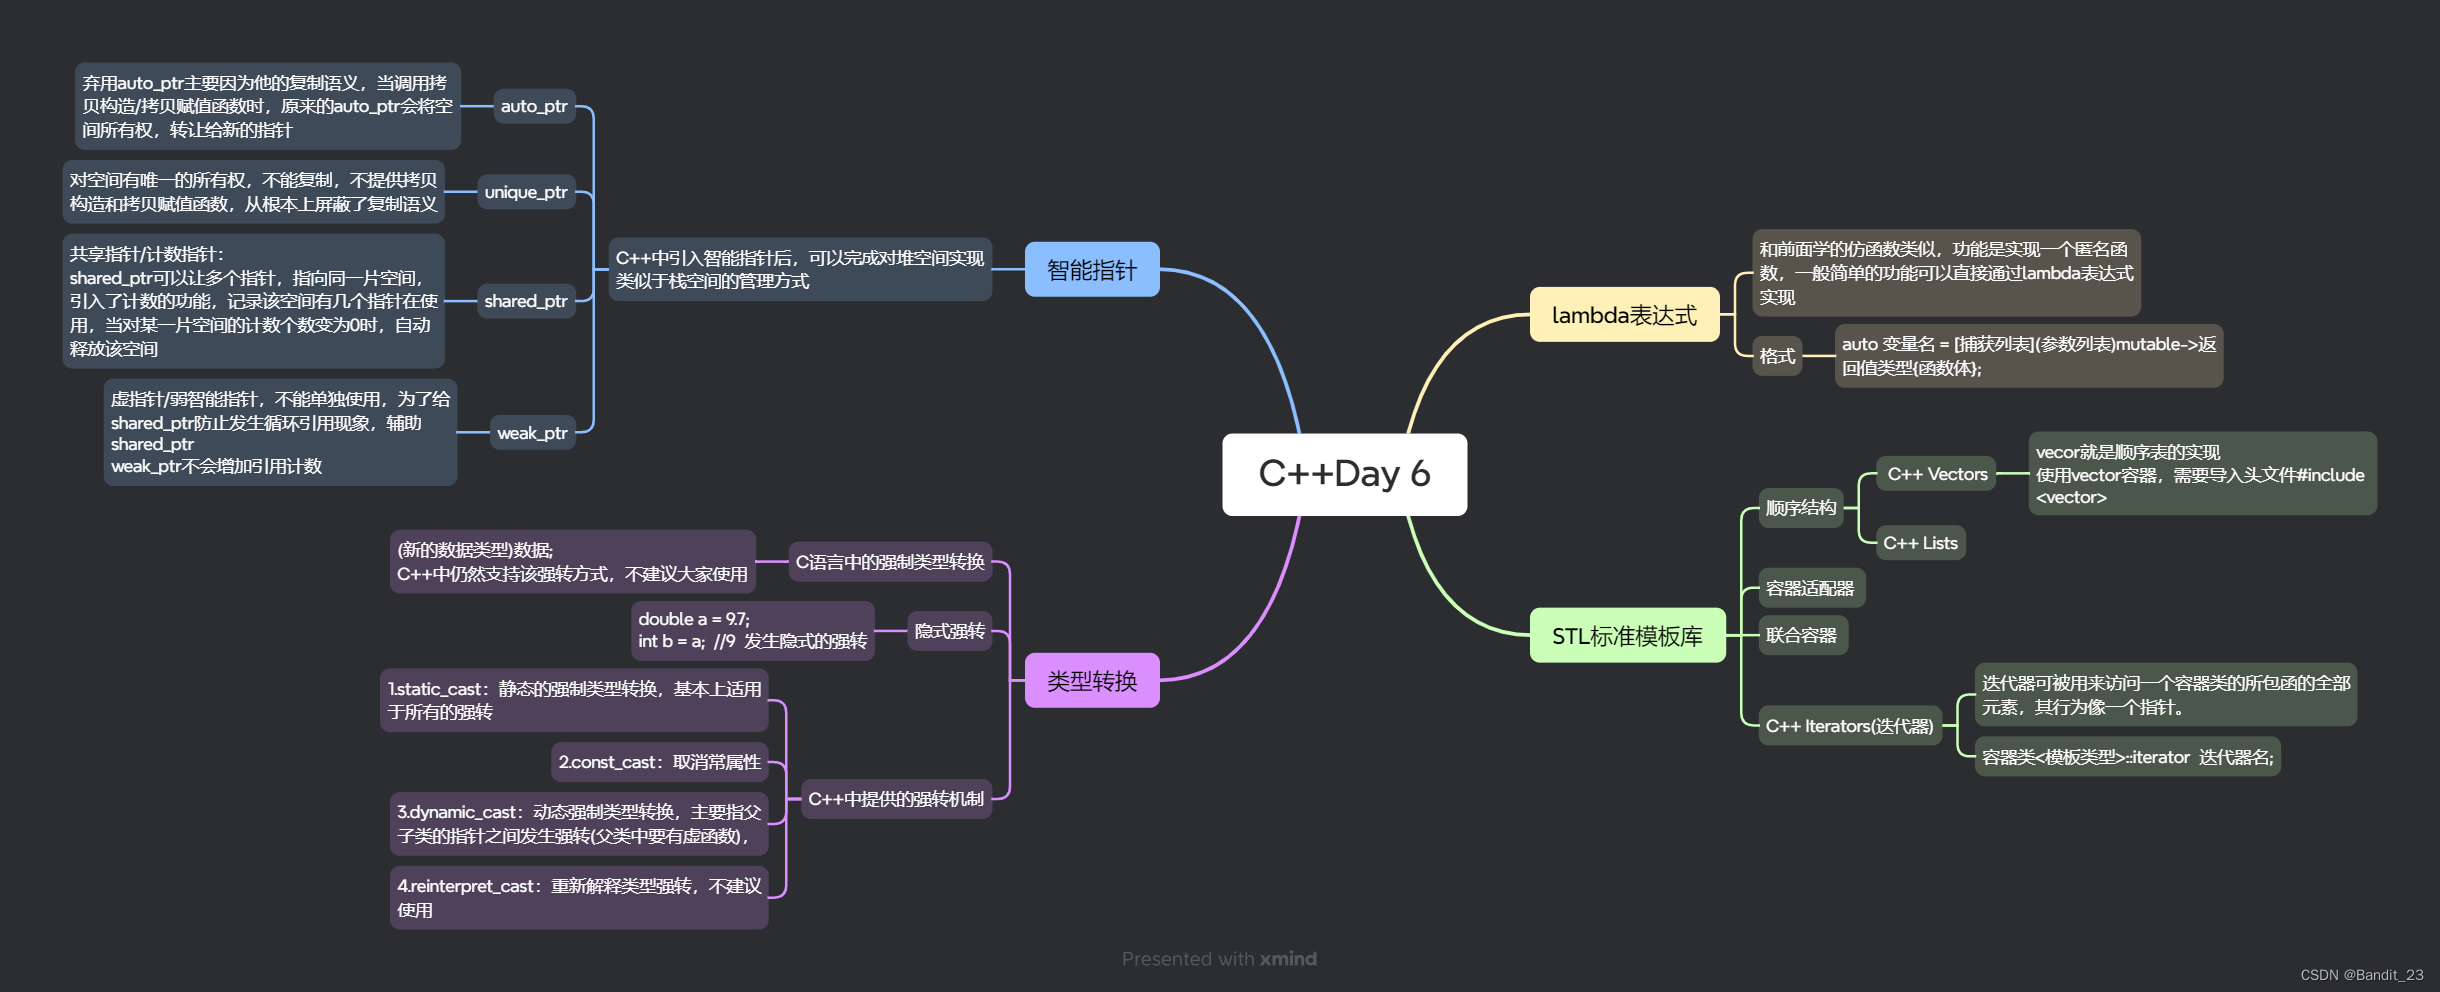 C++Day 7 作业